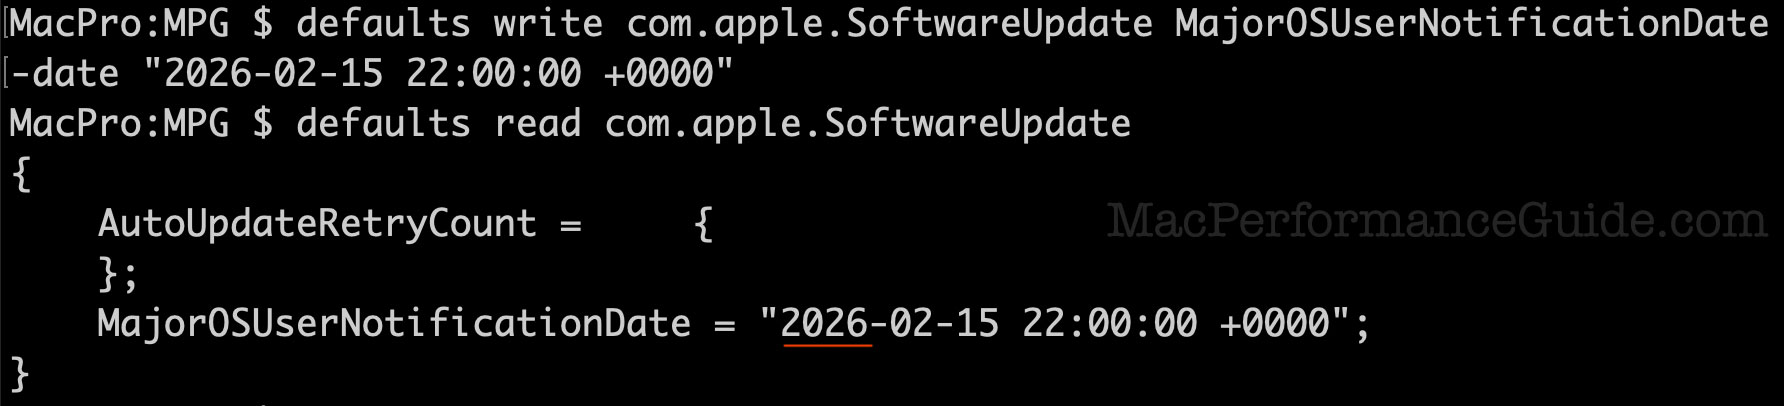 defaults write com.apple.SoftwareUpdate MajorOSUserNotificationDate -date "2026-02-15 22:00:00 +0000"